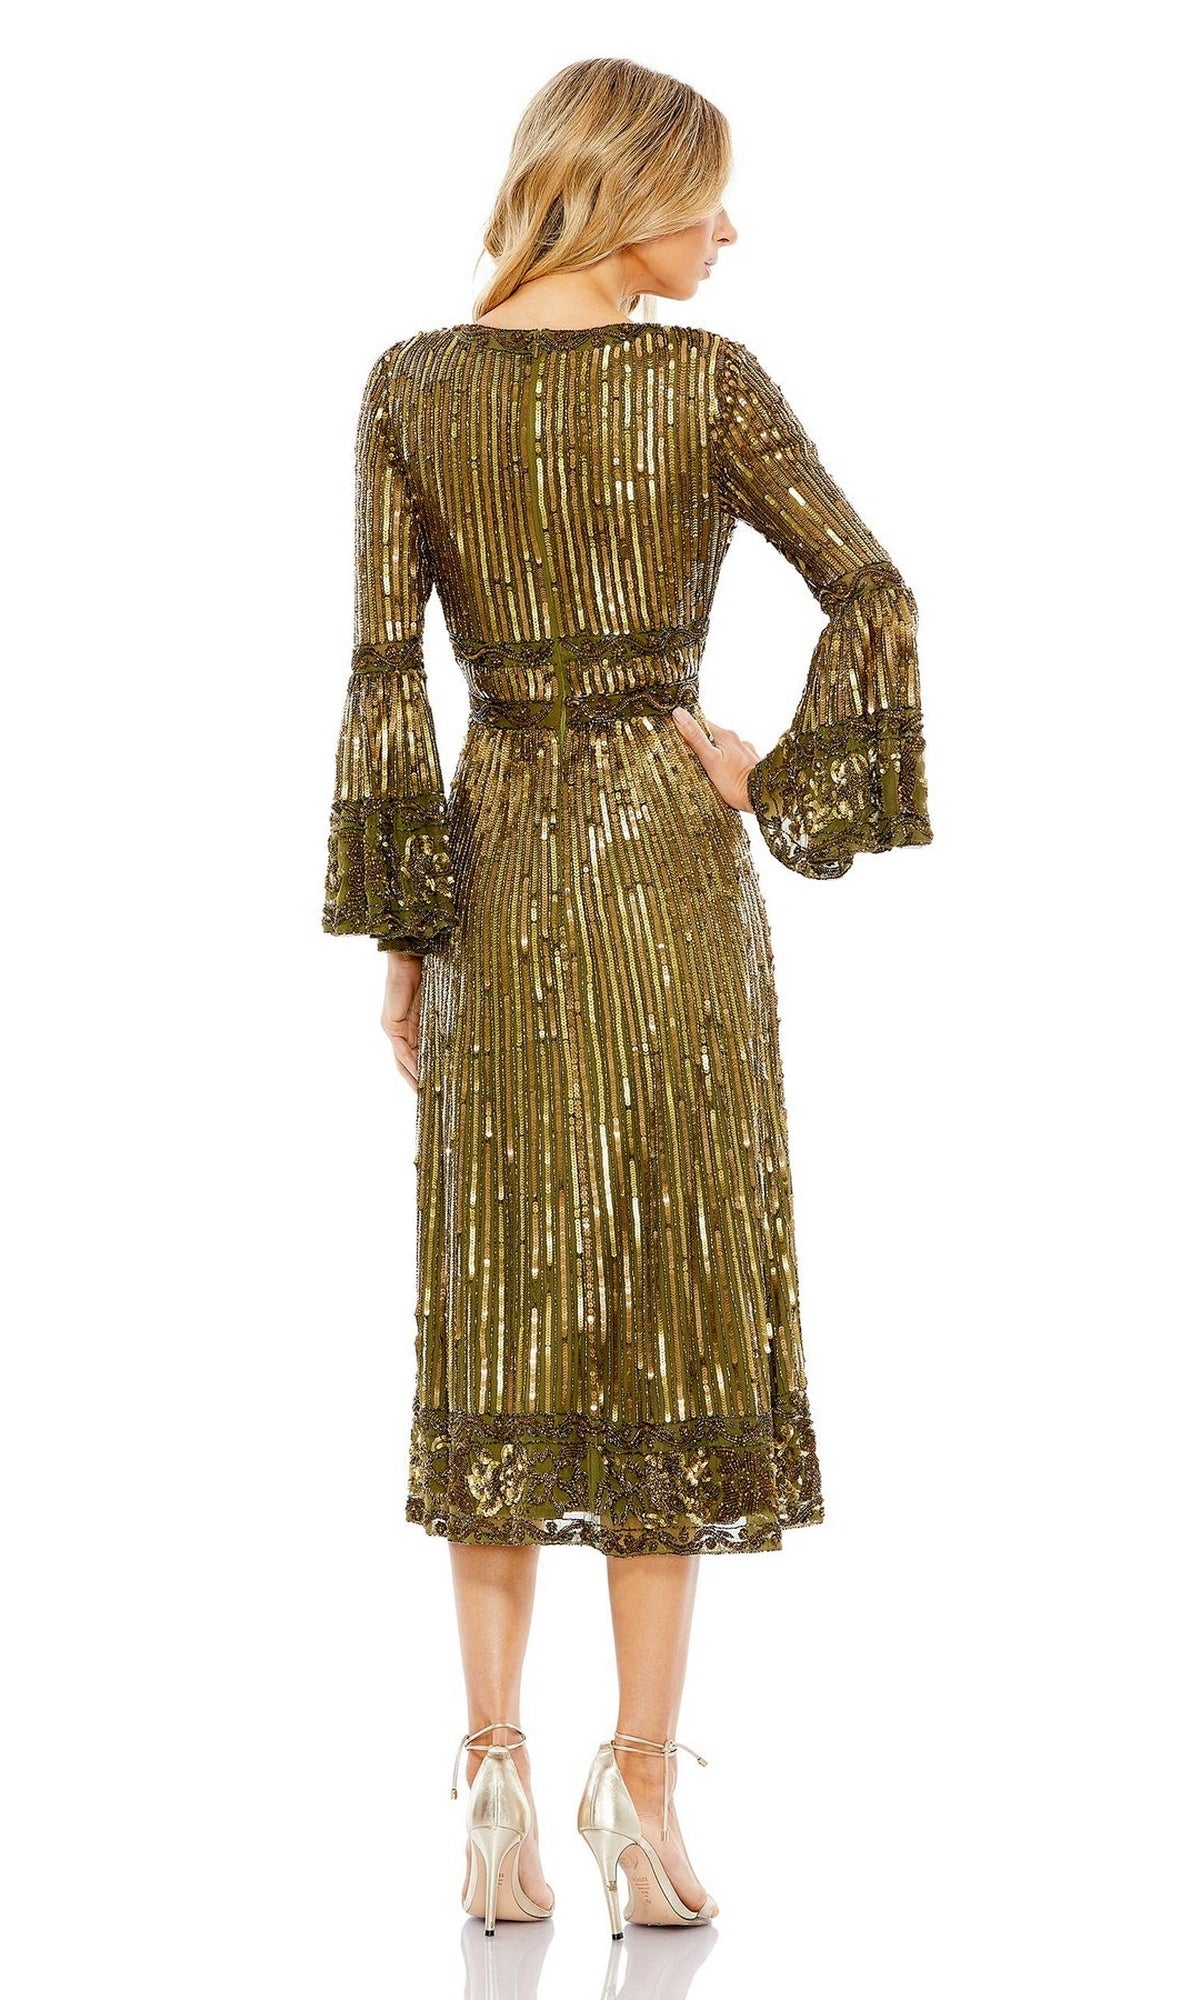 Short Semi-Formal Dress 5591 by Mac Duggal